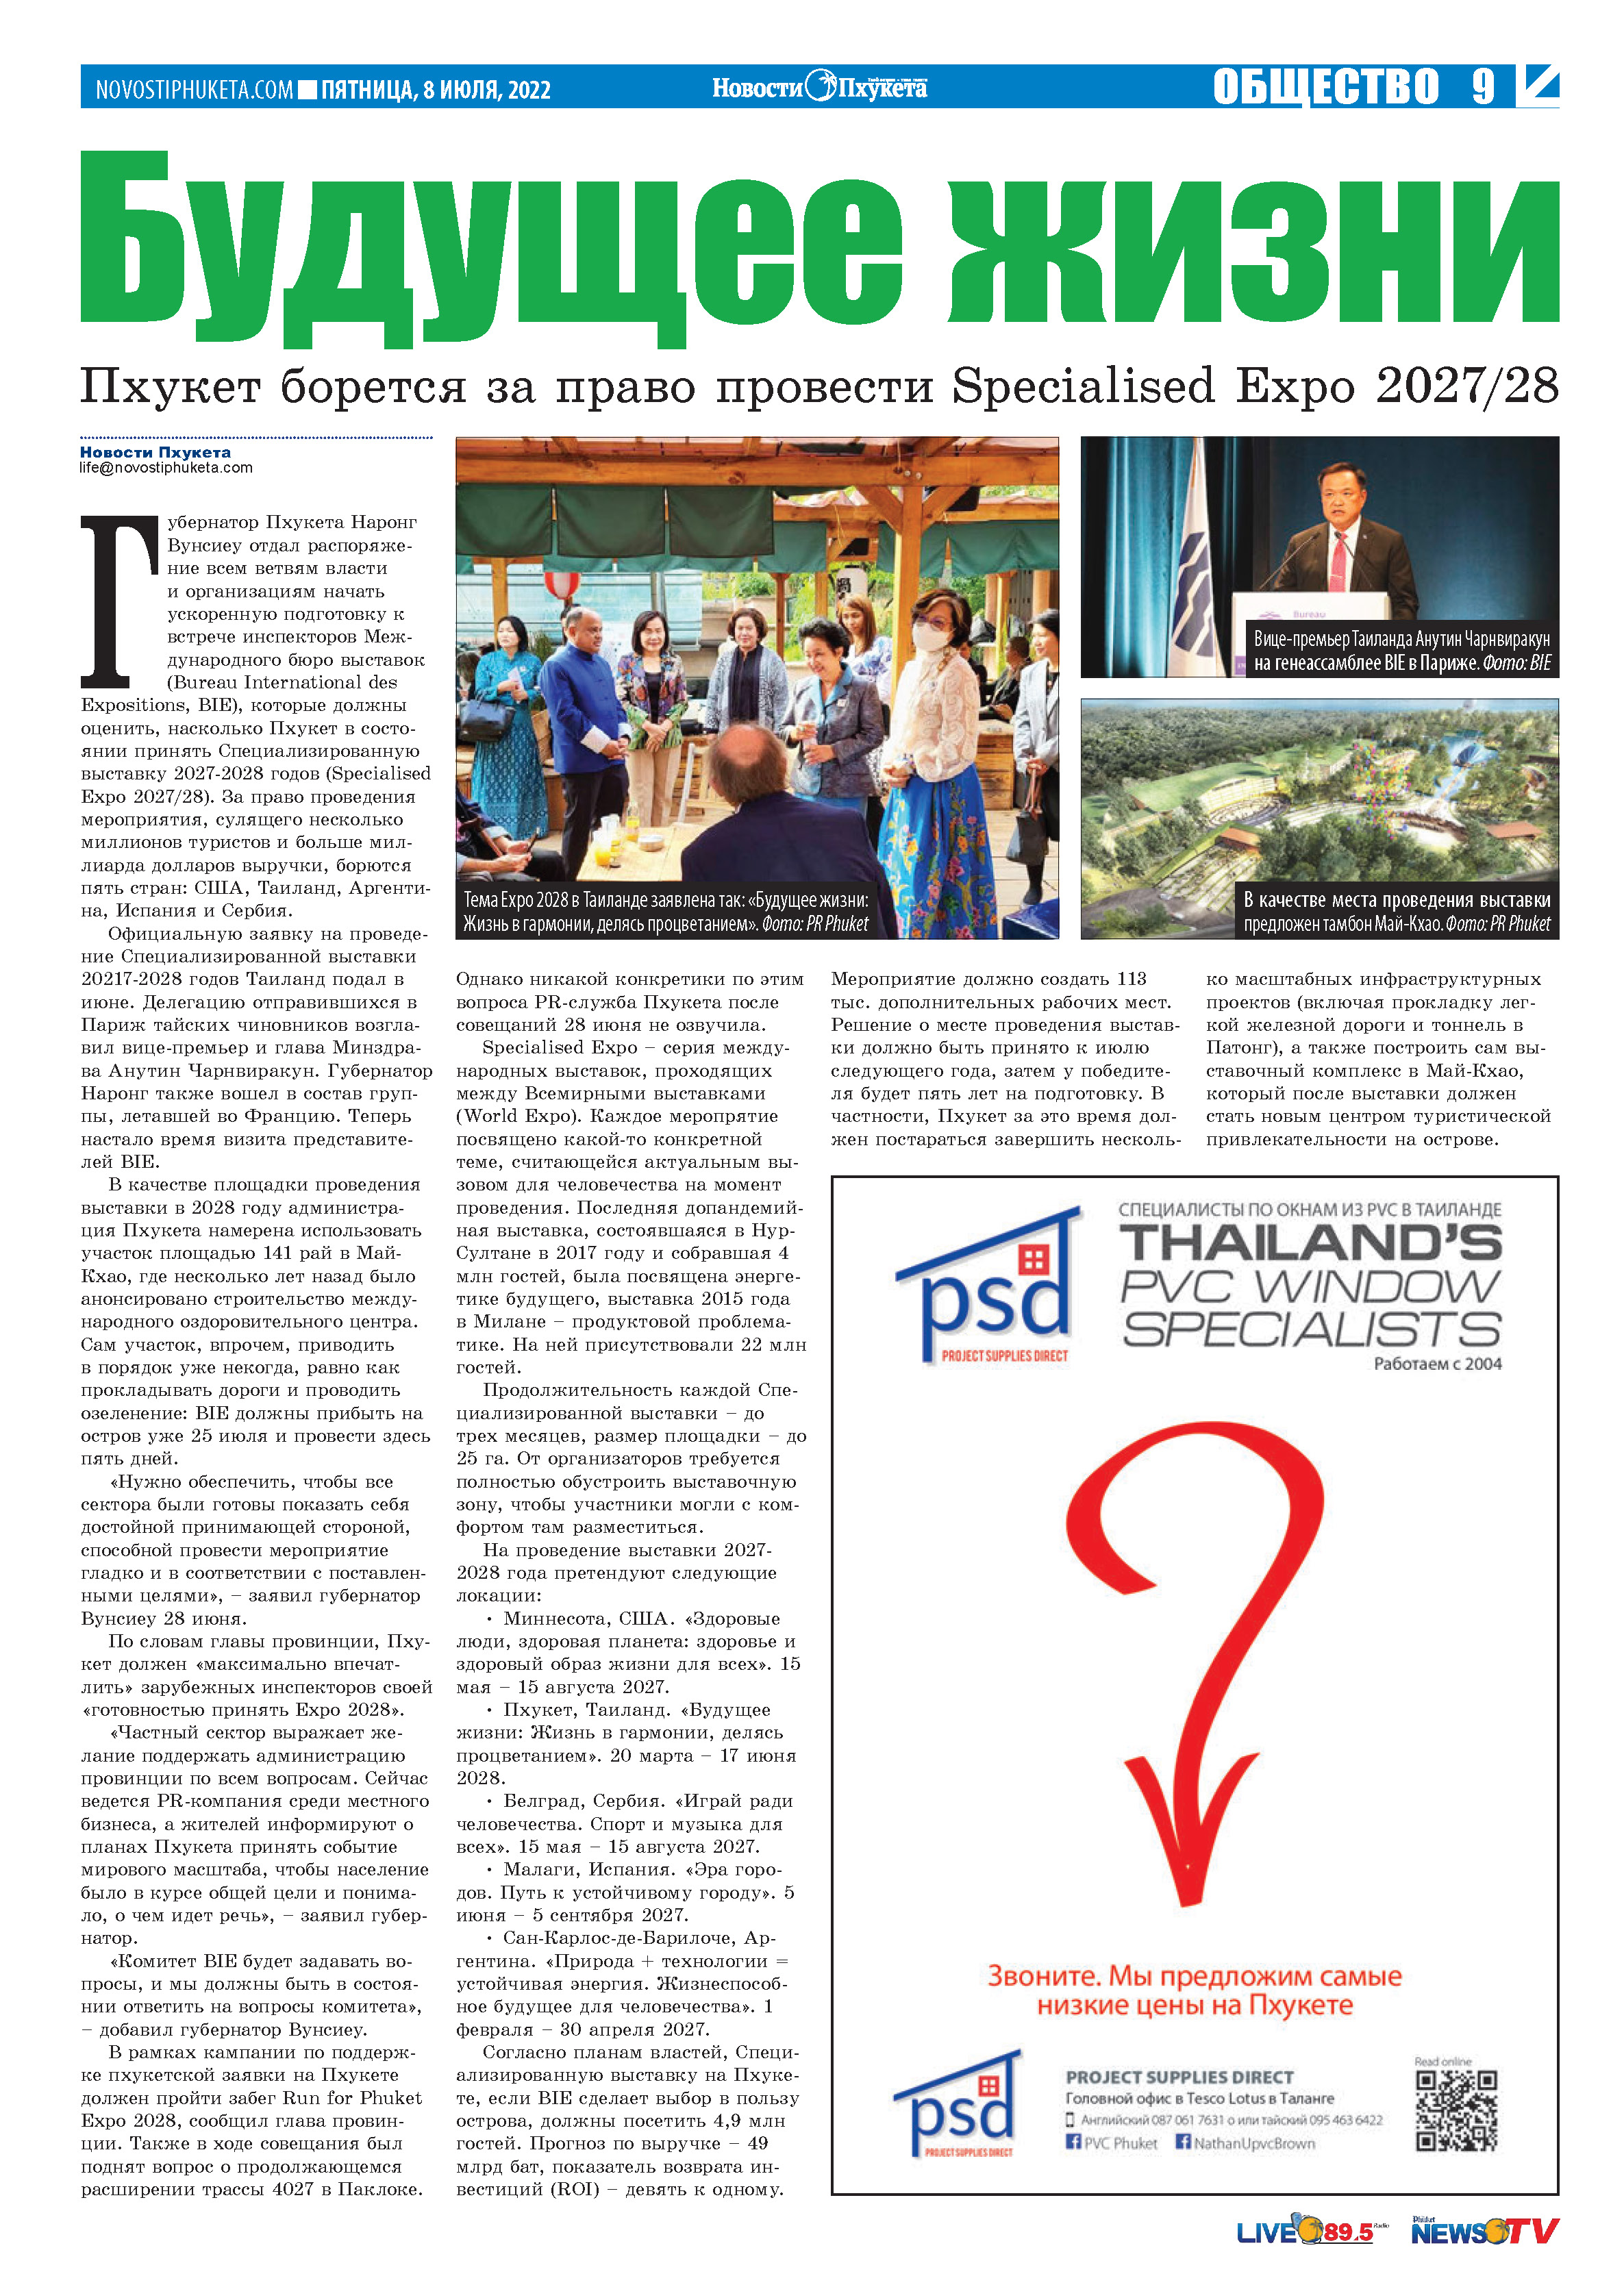 Phuket Newspaper - https://www.novostiphuketa.com/archive/08-07-2022/08-07-2022_Page_09.jpg